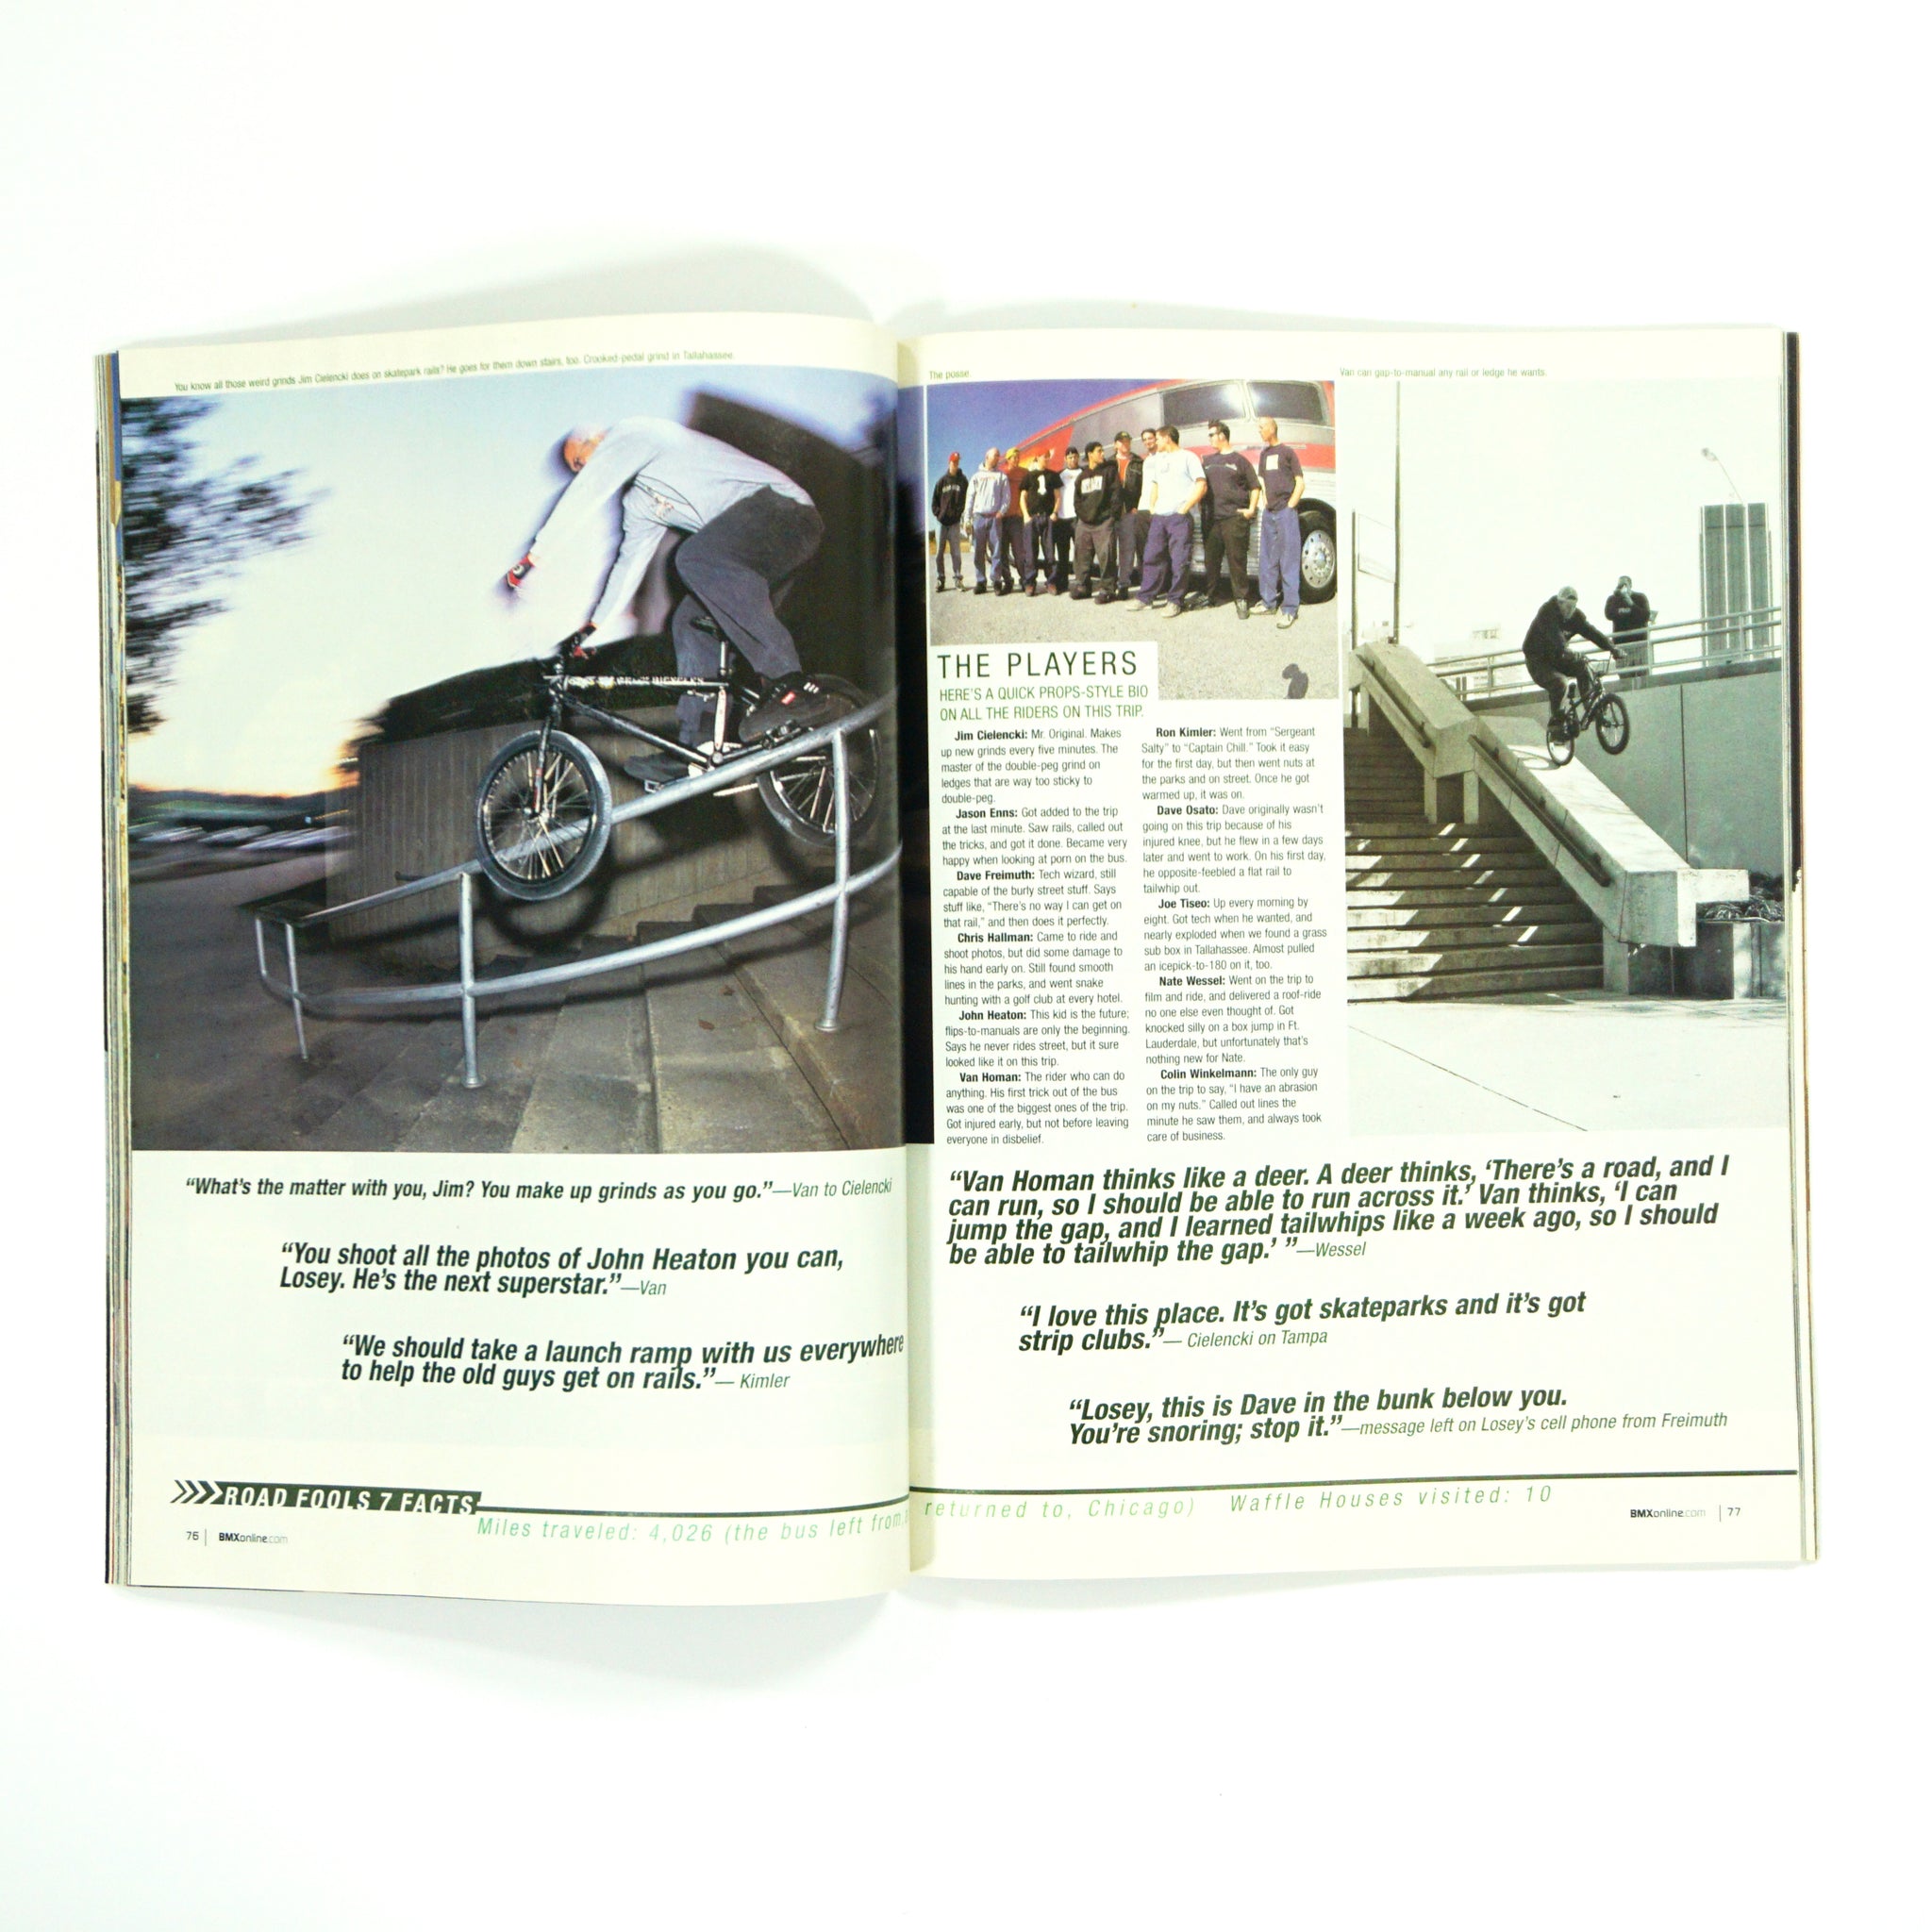 Ride BMX Magazine - May 2001 Issue